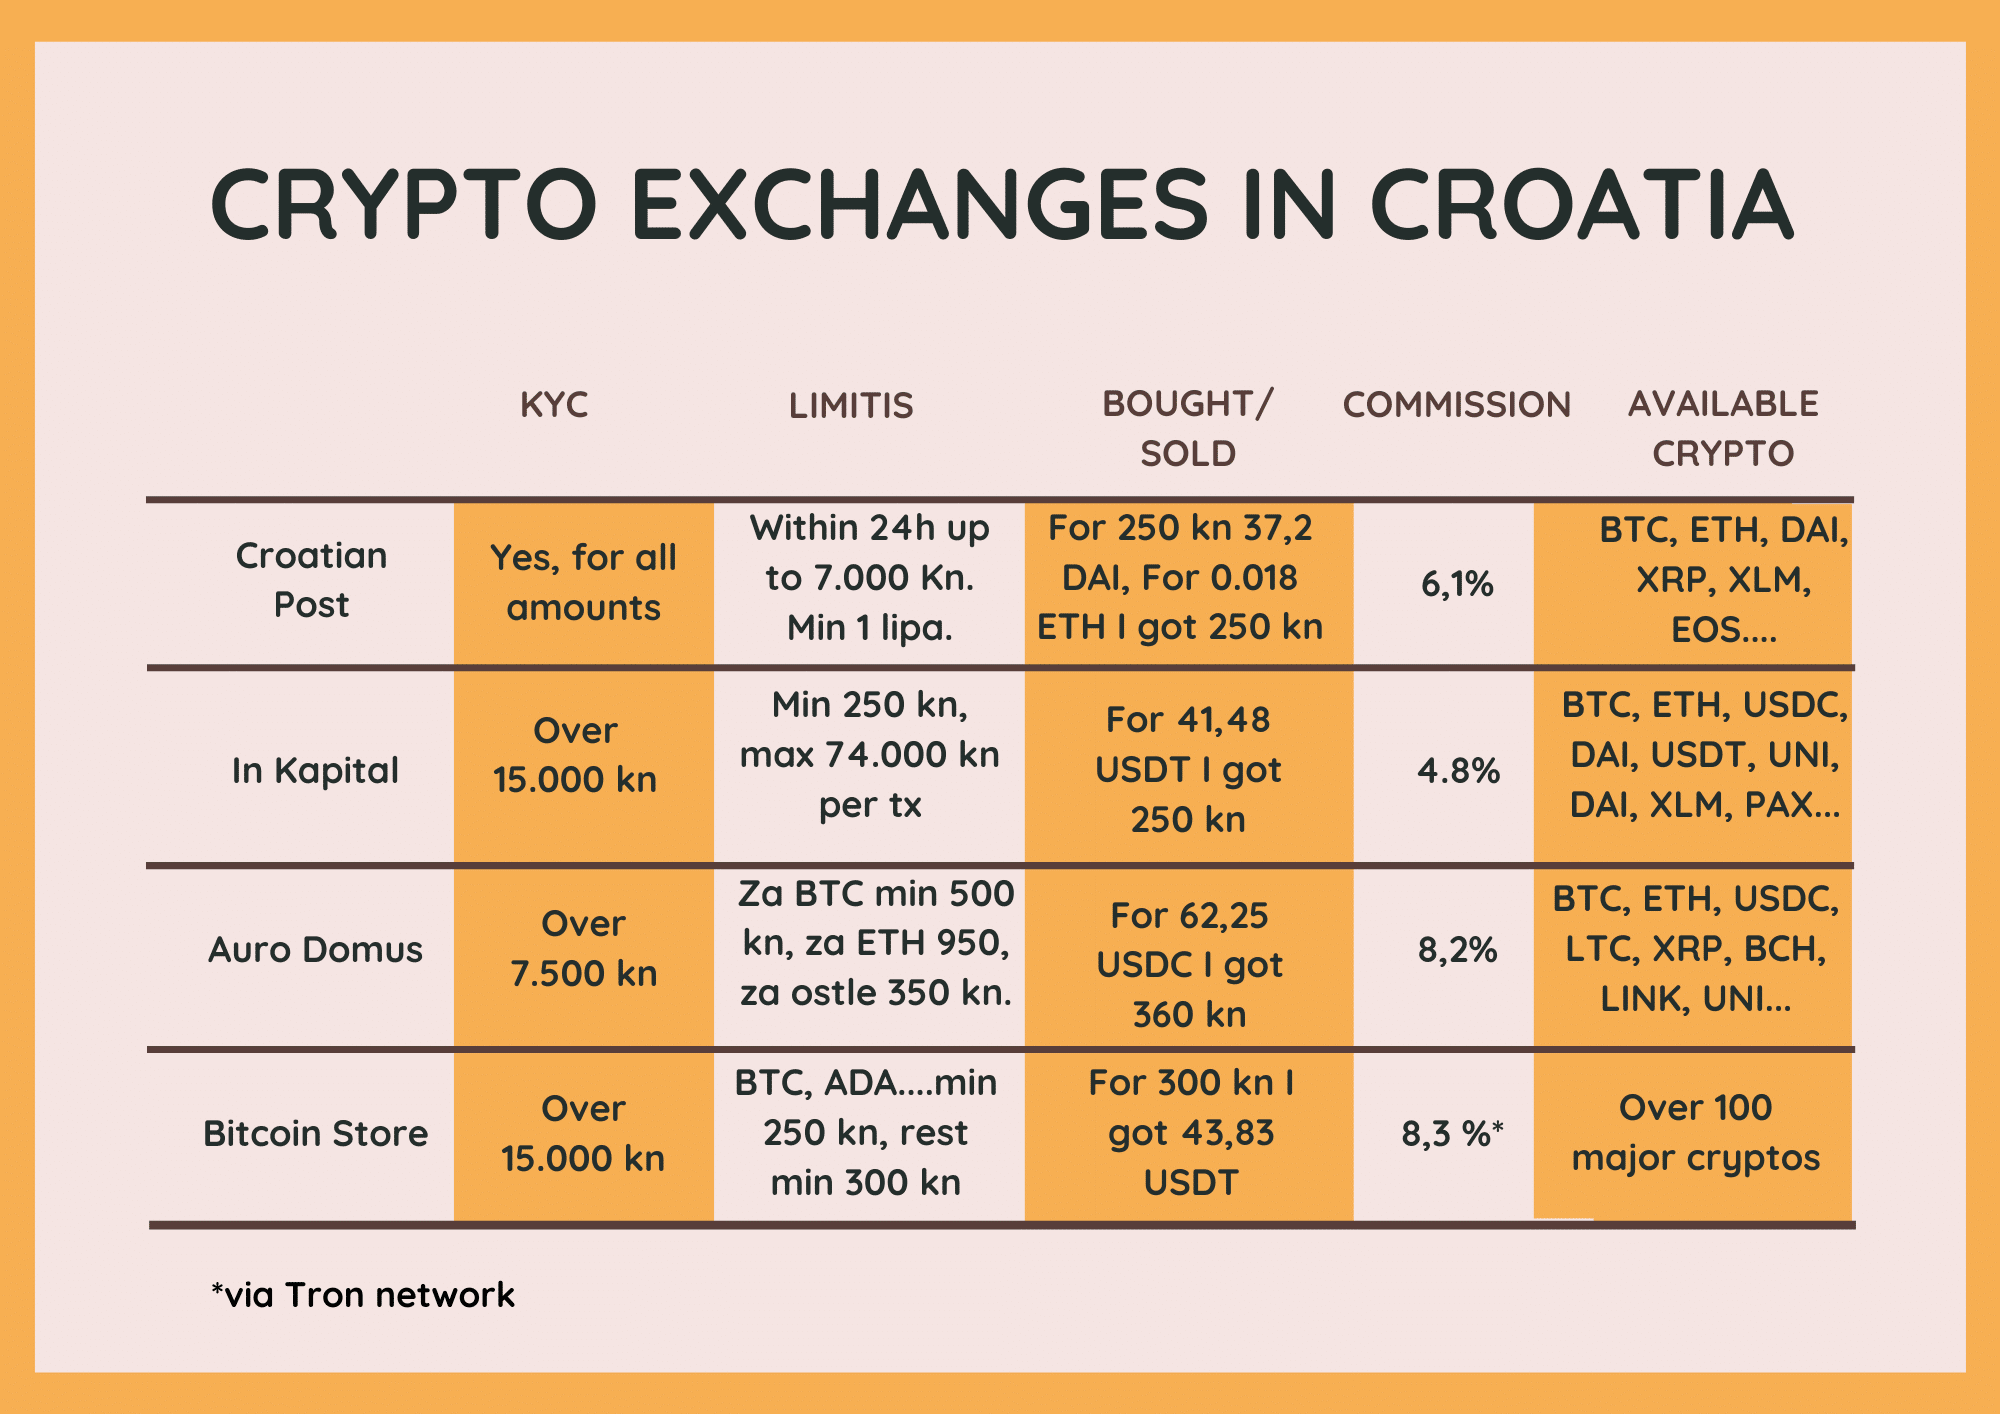 Crypto exchanges in Croatia